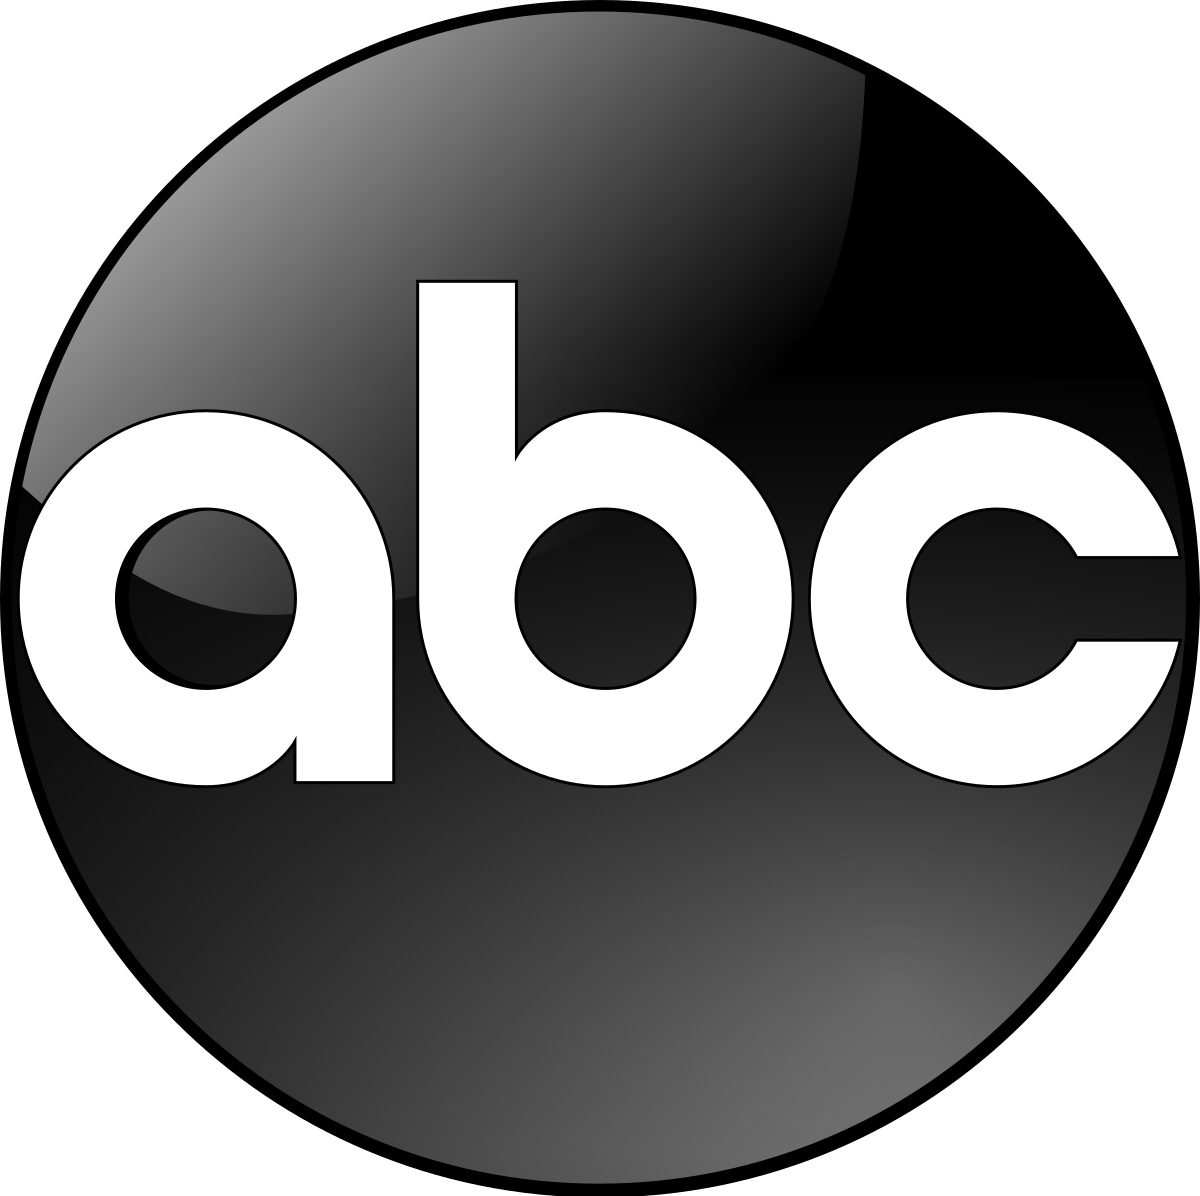 2013 Logo - American Broadcasting Company